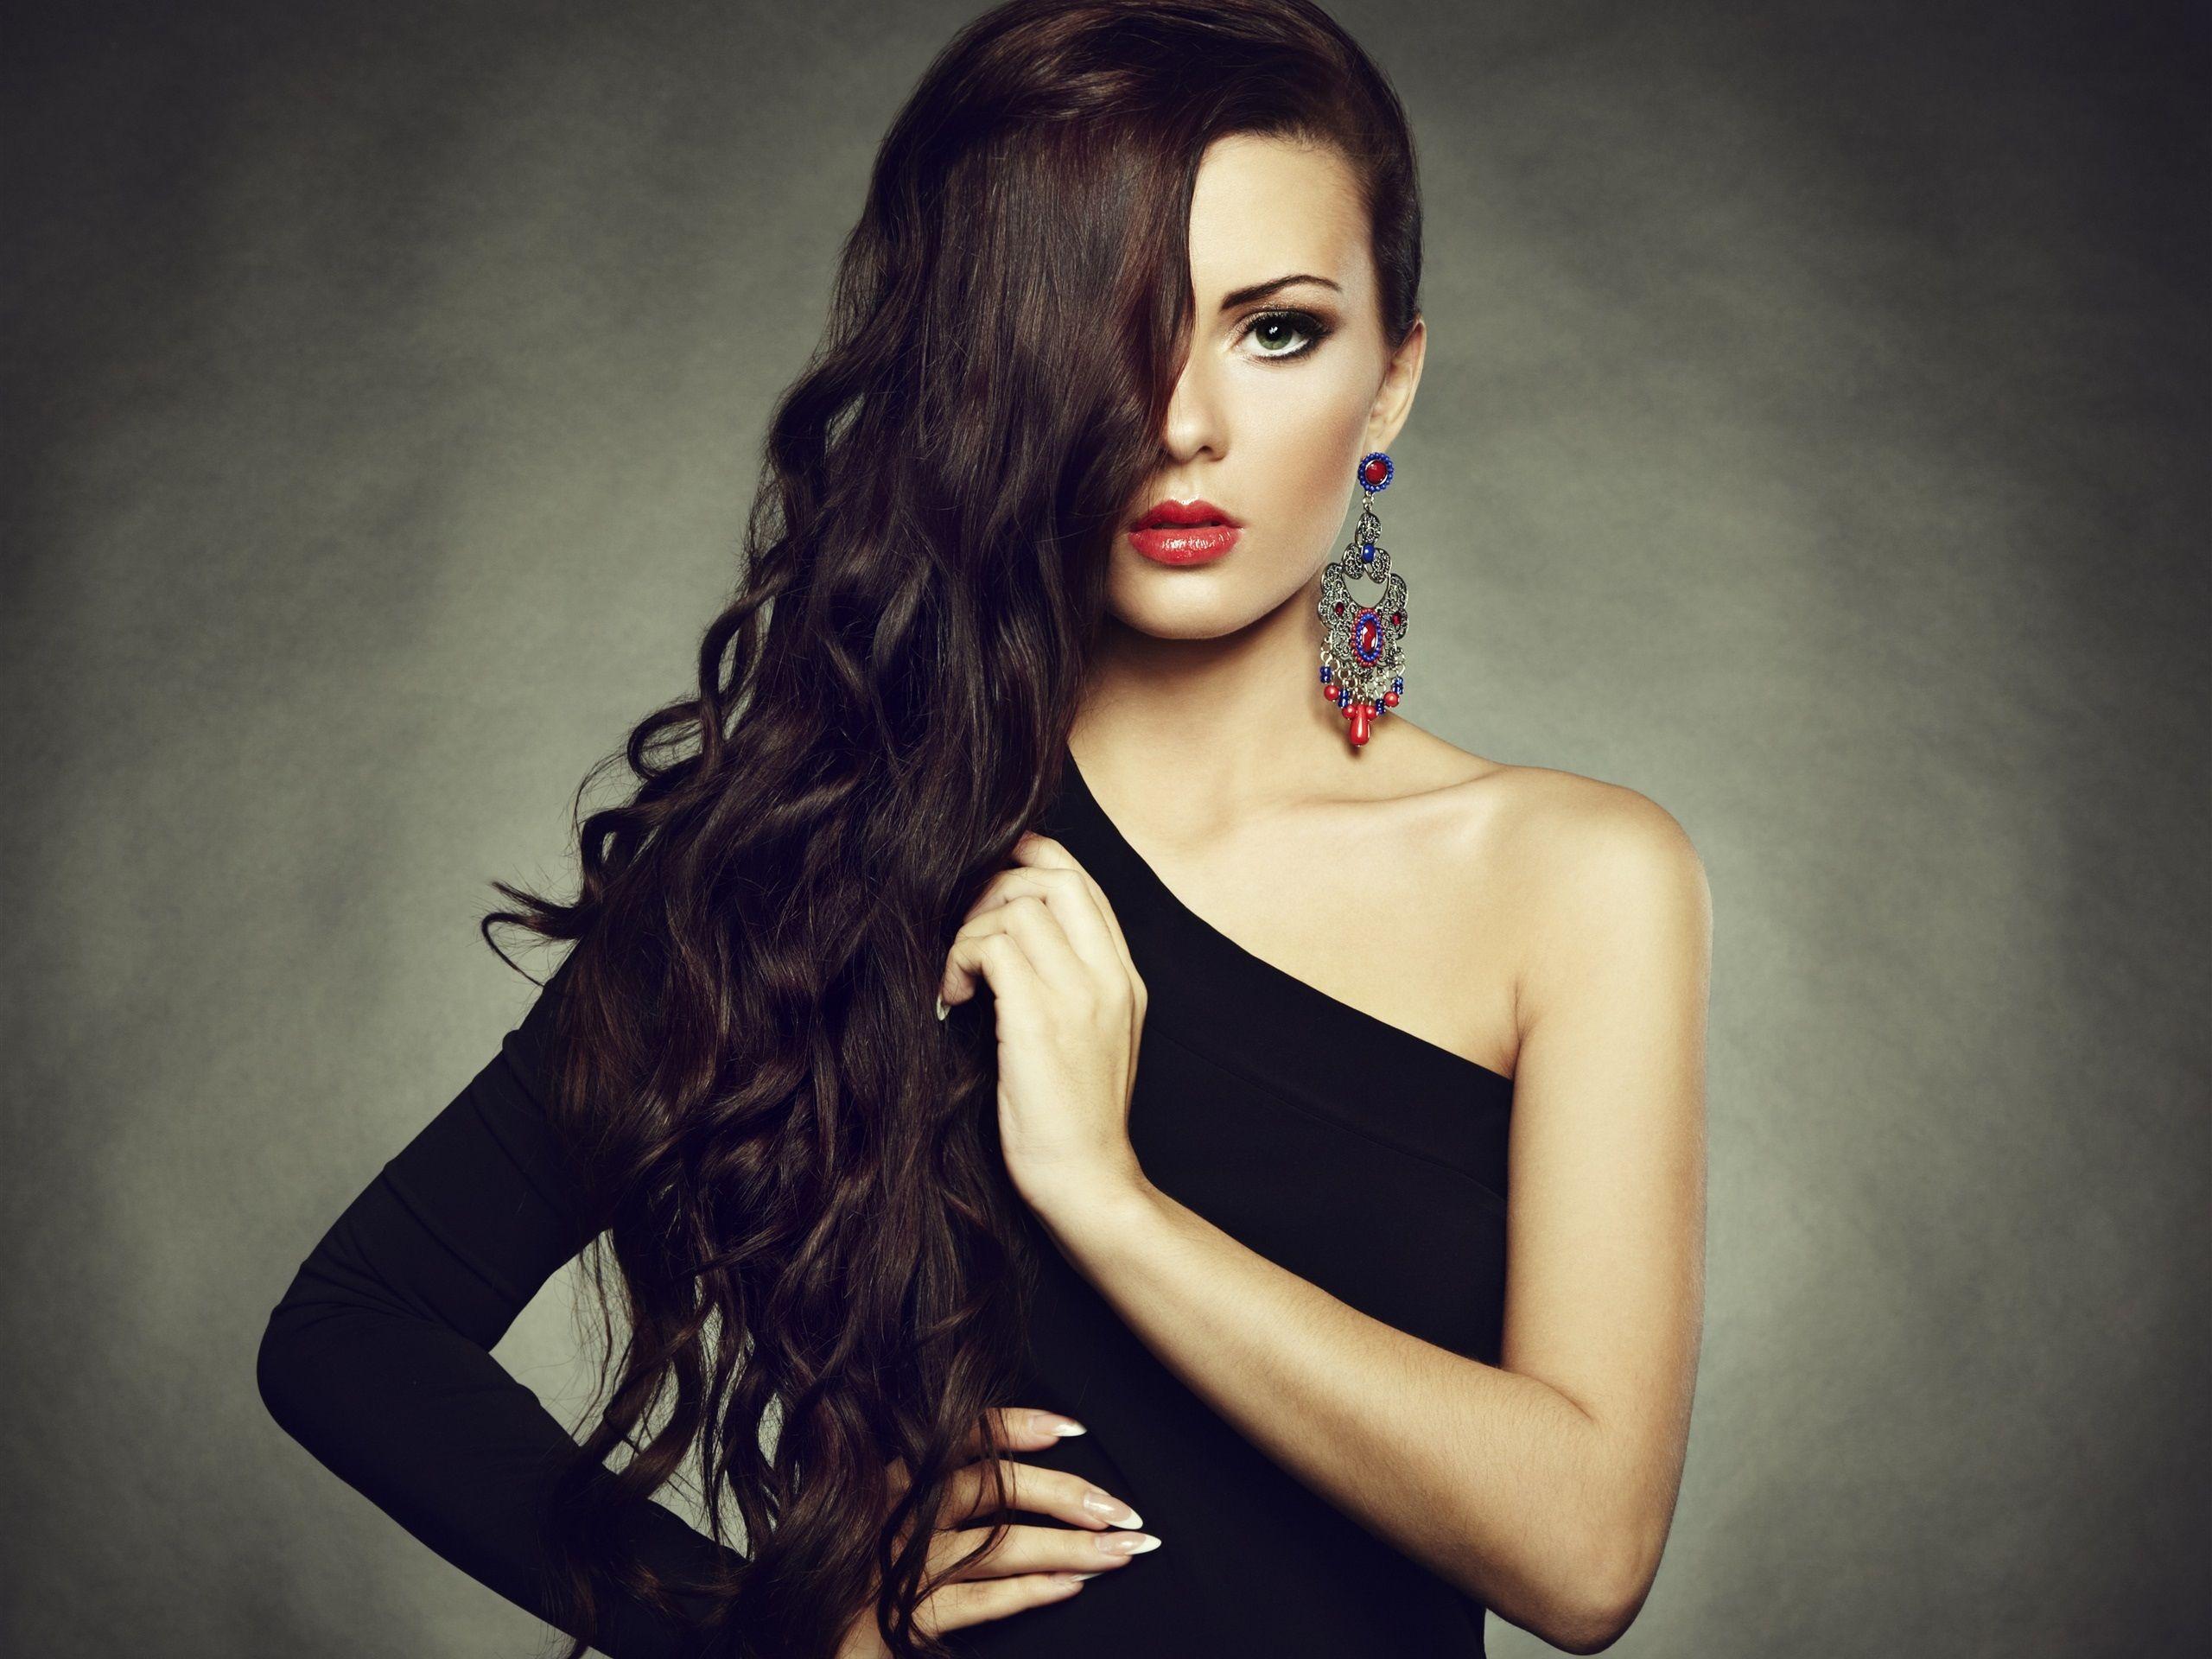 Makeup fashion girl, red lips, long hair, earrings, shoulder black